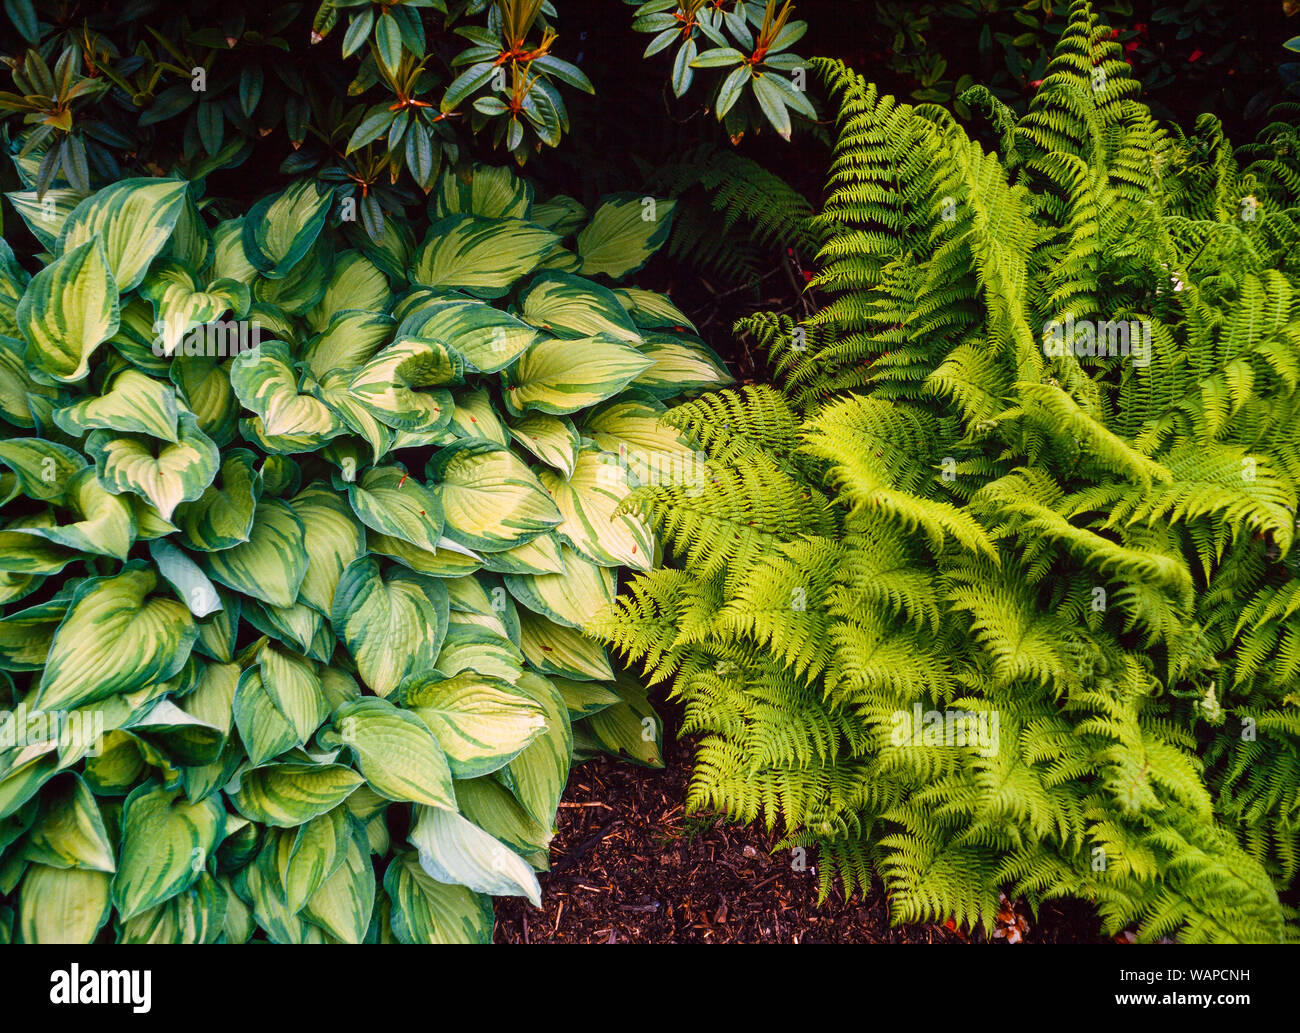 Hosta fortunei 'Aurea marginata' fern Dryopteris sp. both shade loving garden plants. Stock Photo